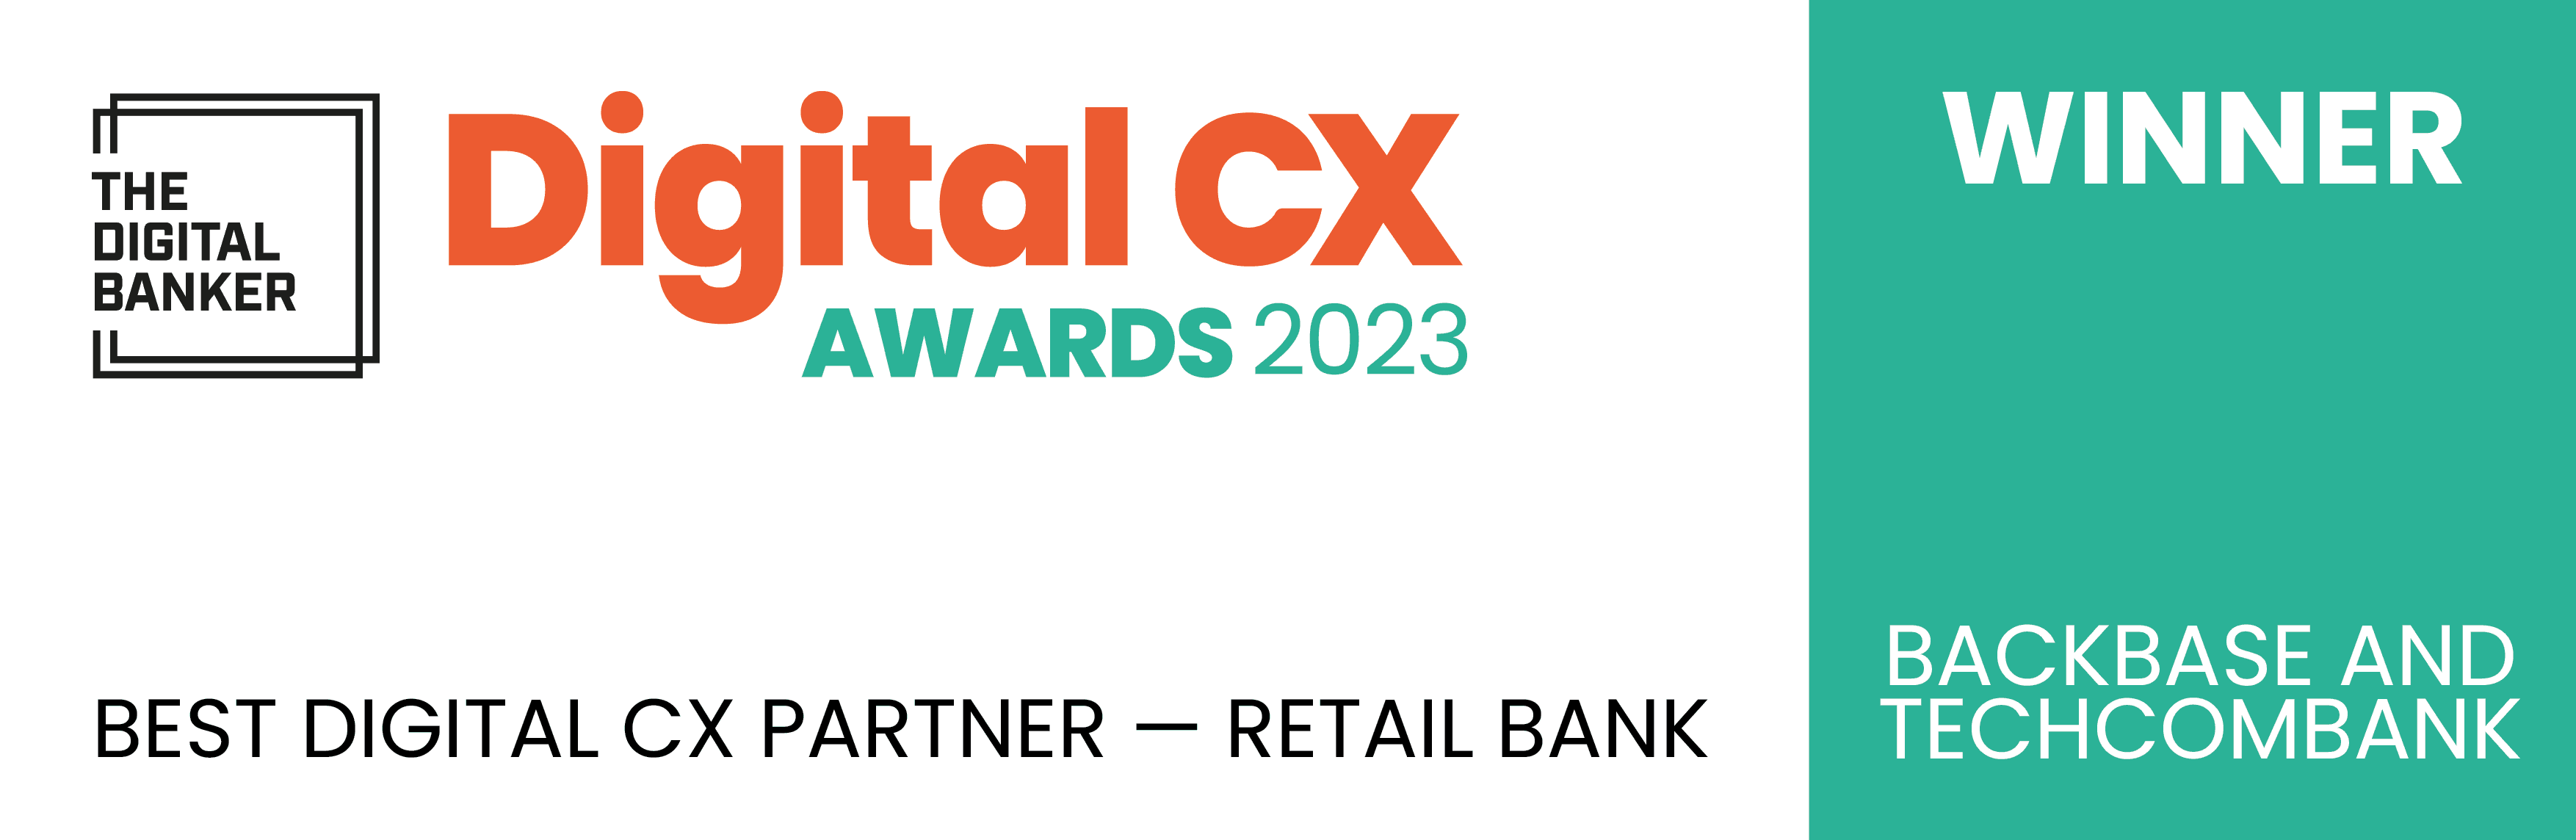 [Press and Media]-[Body Image]-[Techcombank and Backbase Win The Best Digital CX Partner Retail Bank Award]-[EN]